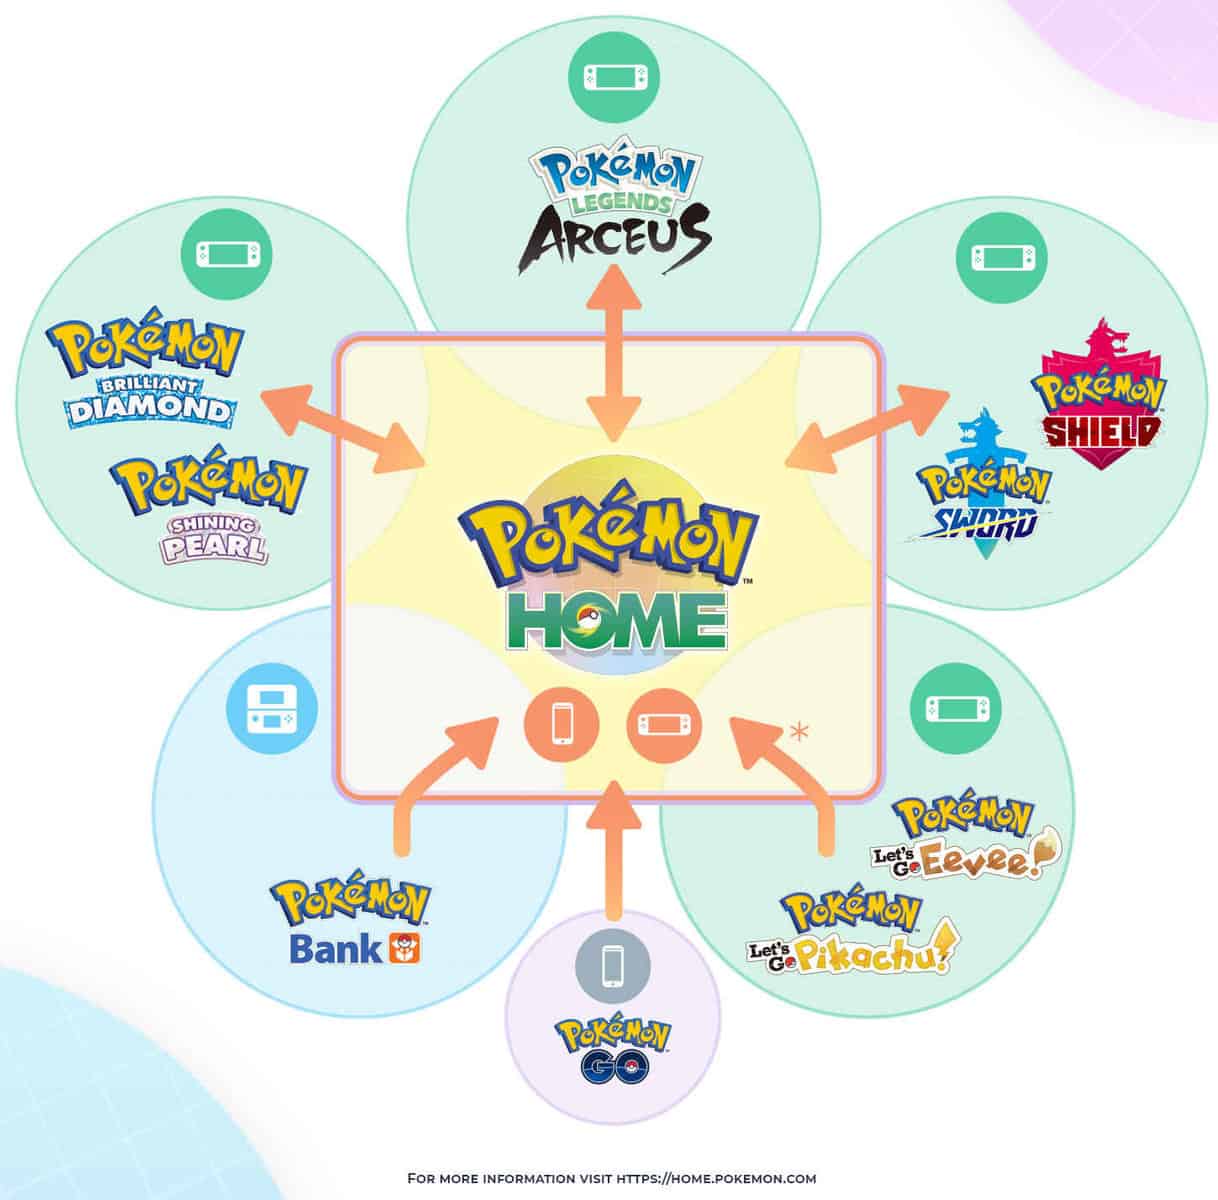 How to transfer Pokémon from Pokémon Home to Pokémon Legends Arceus